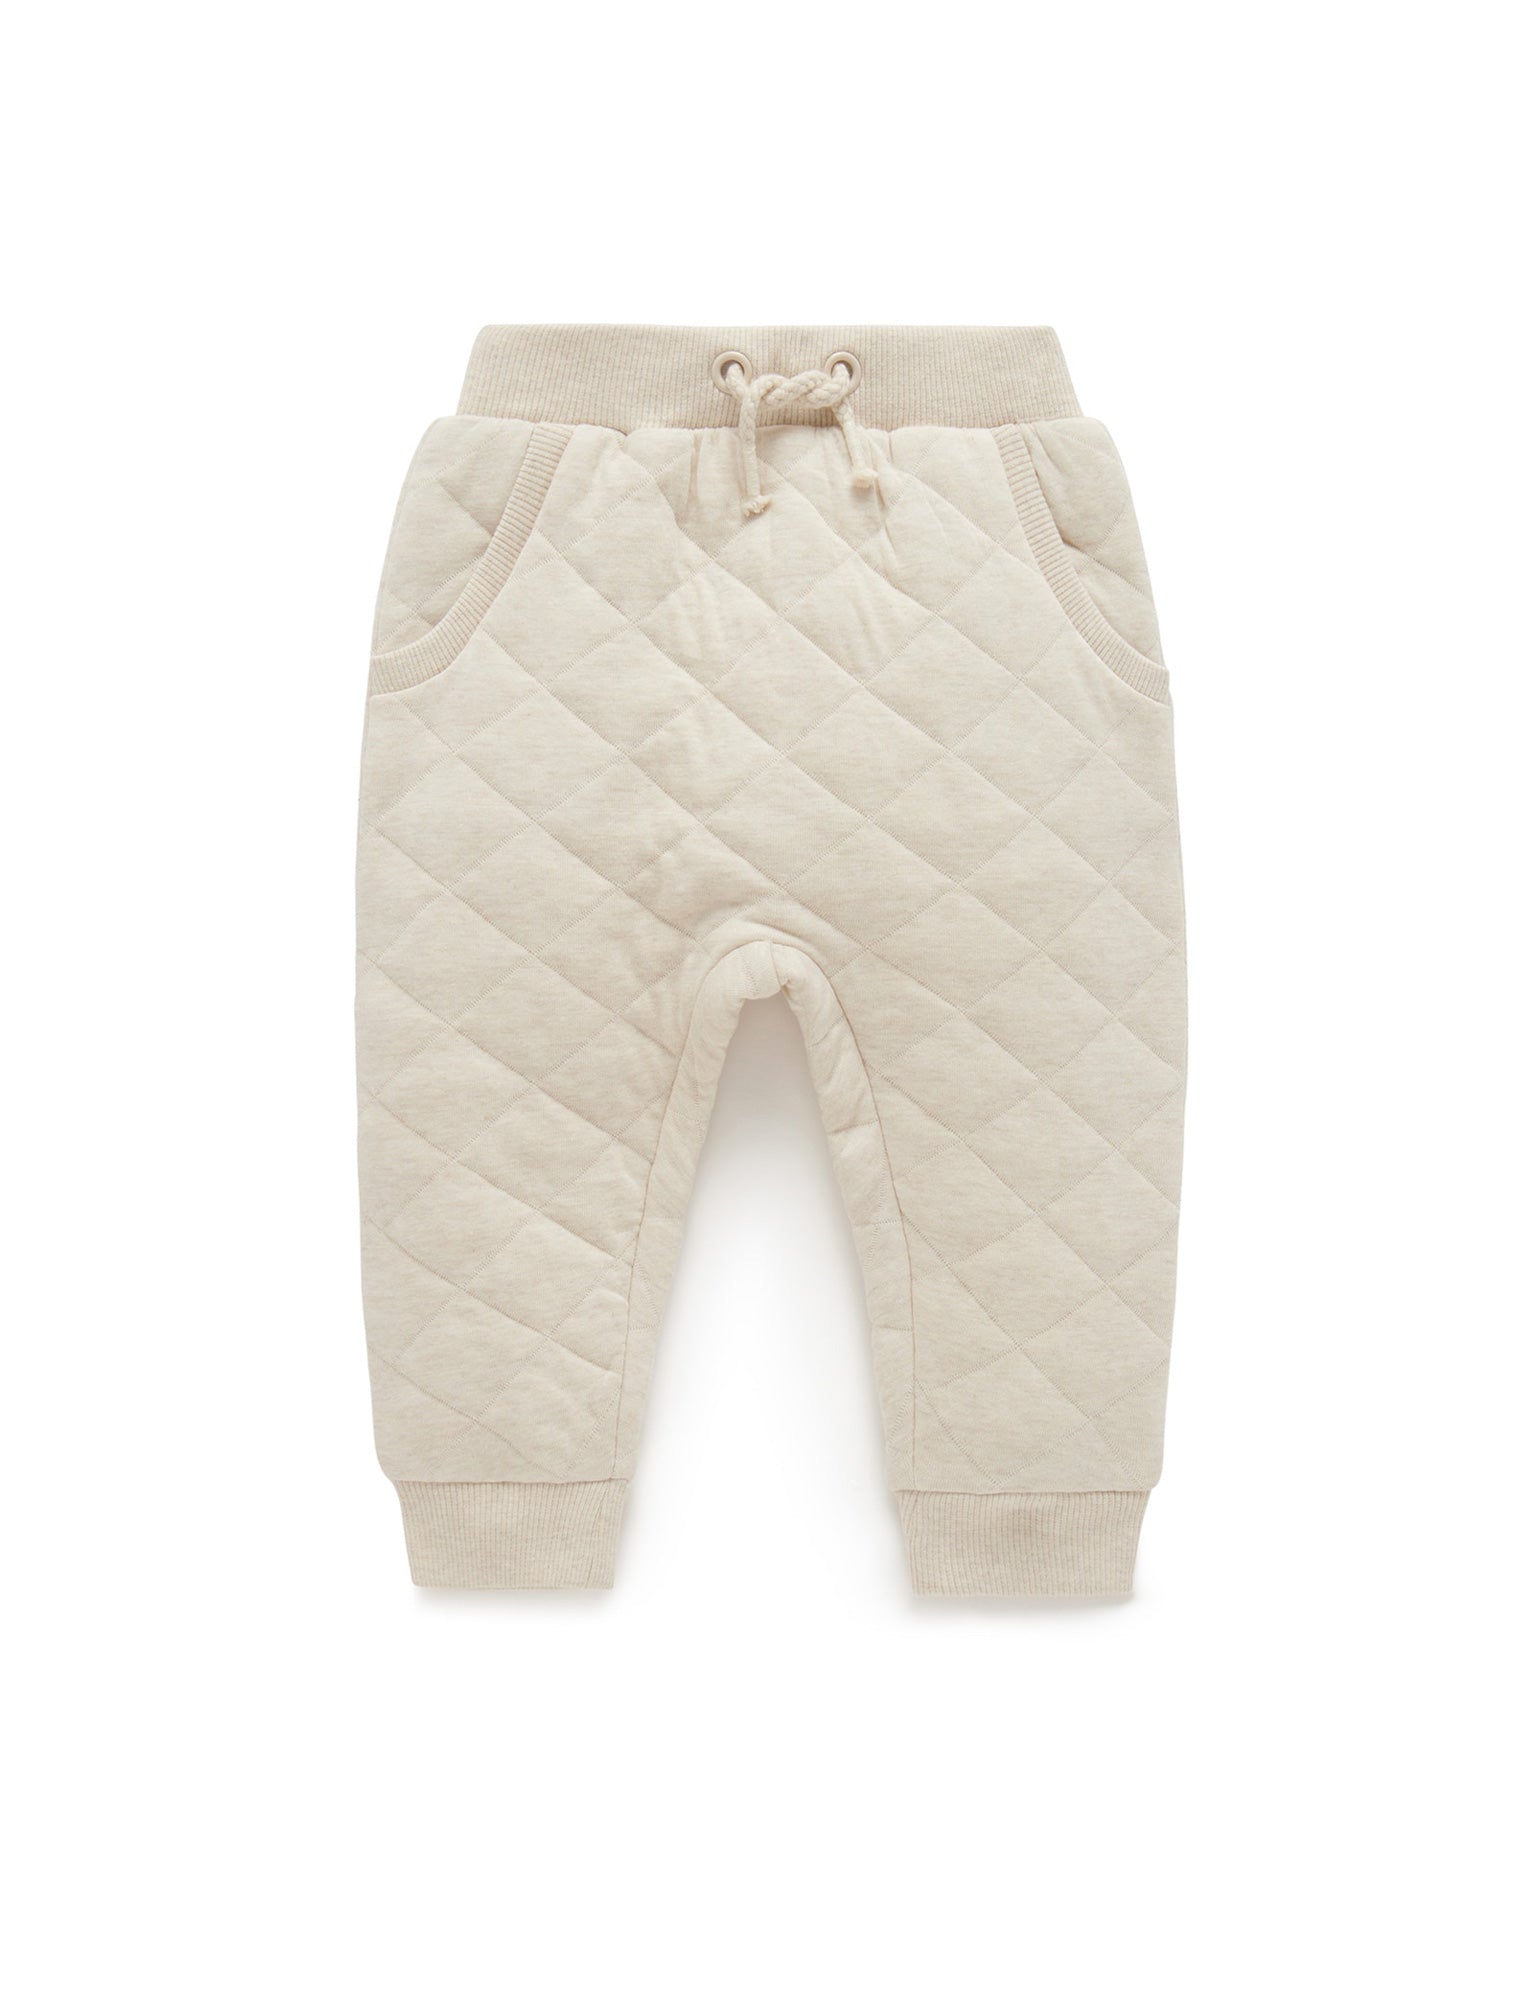 5-pack Cotton Pants - White/light beige melange - Kids